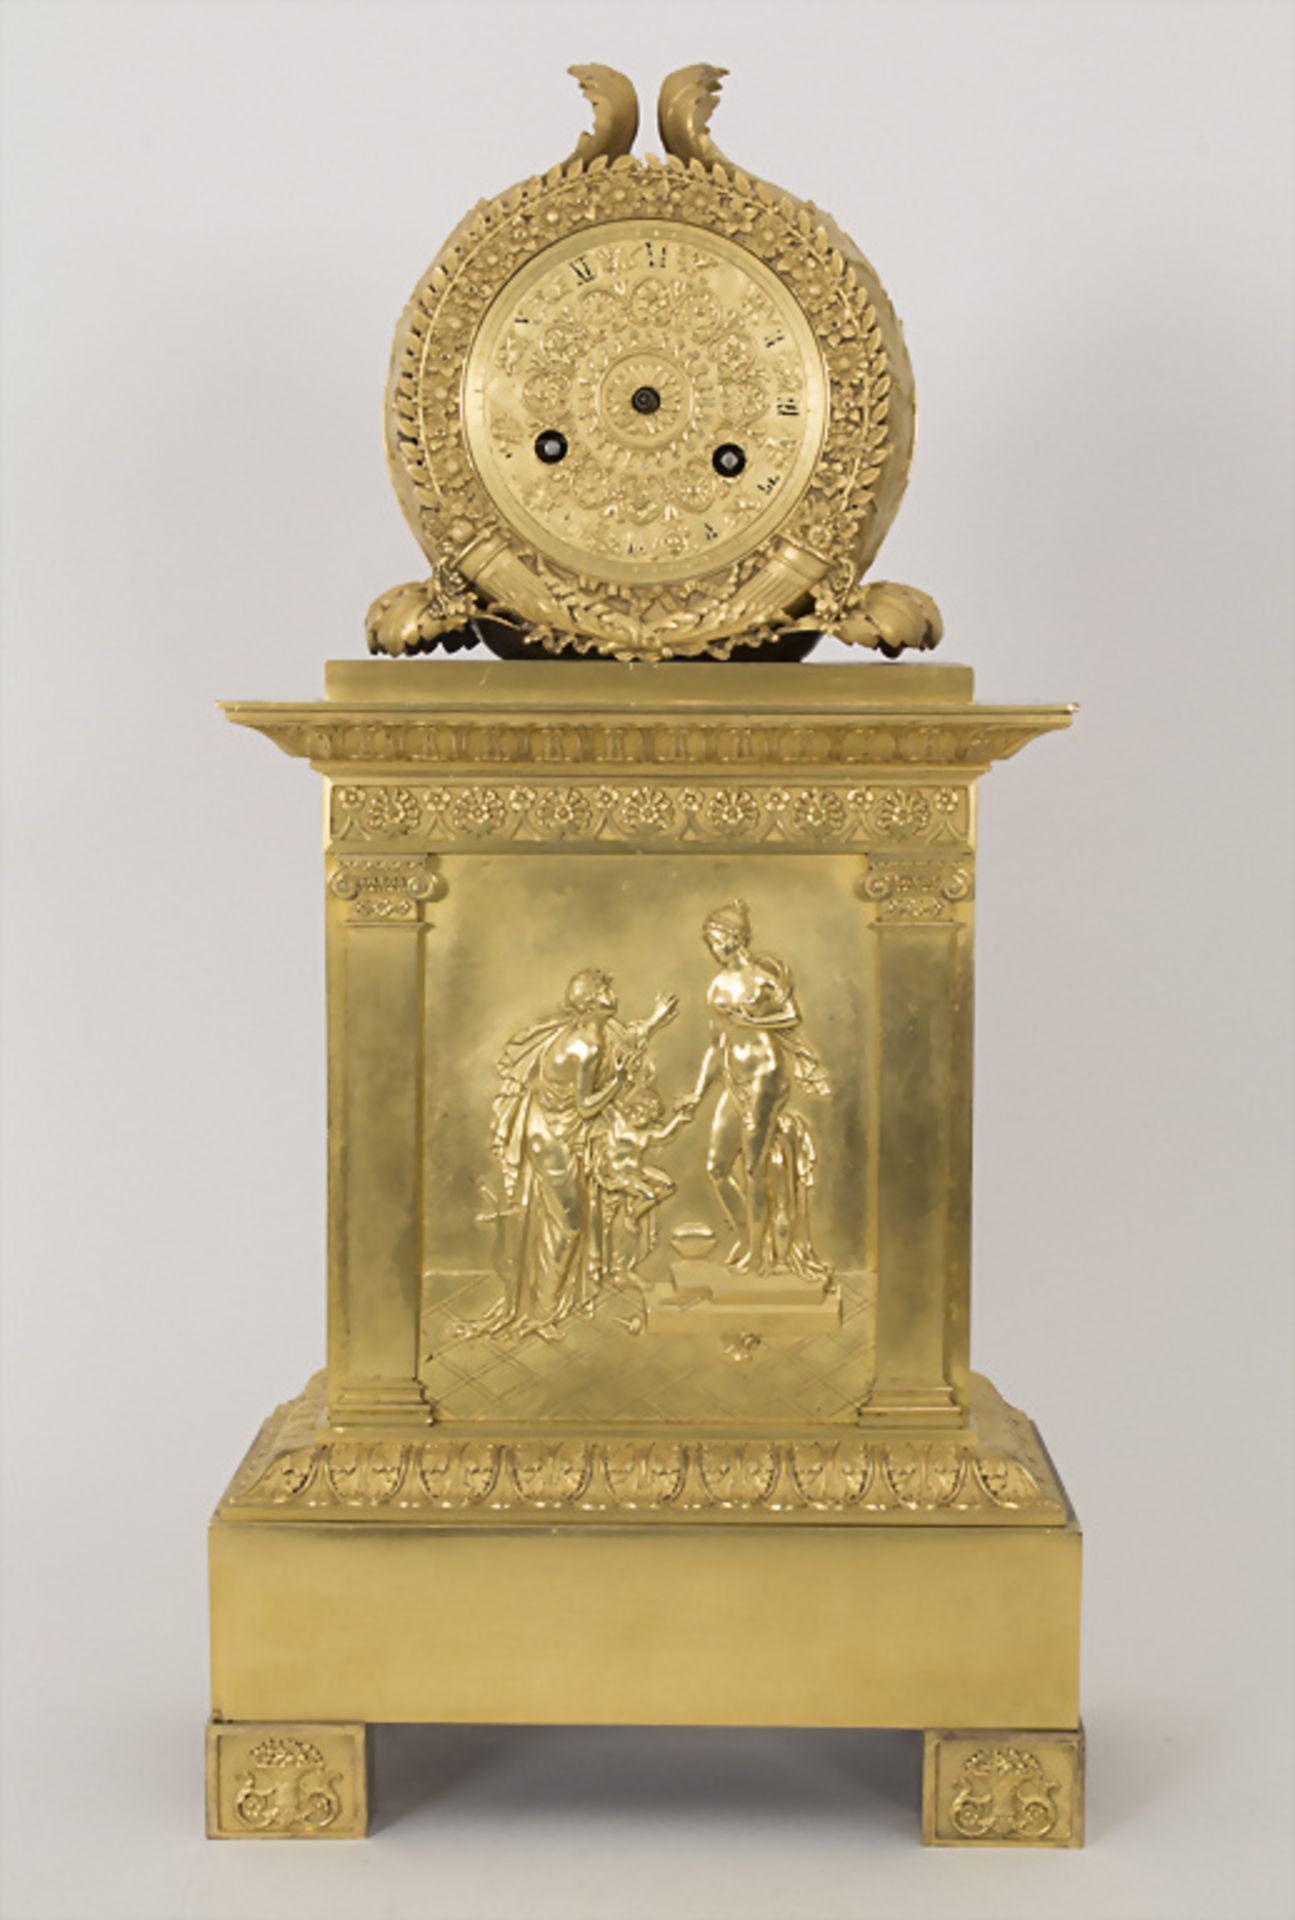 Empire Pendule 'Die Künste' / An Empire clock 'The fine arts', Paris, um 1800